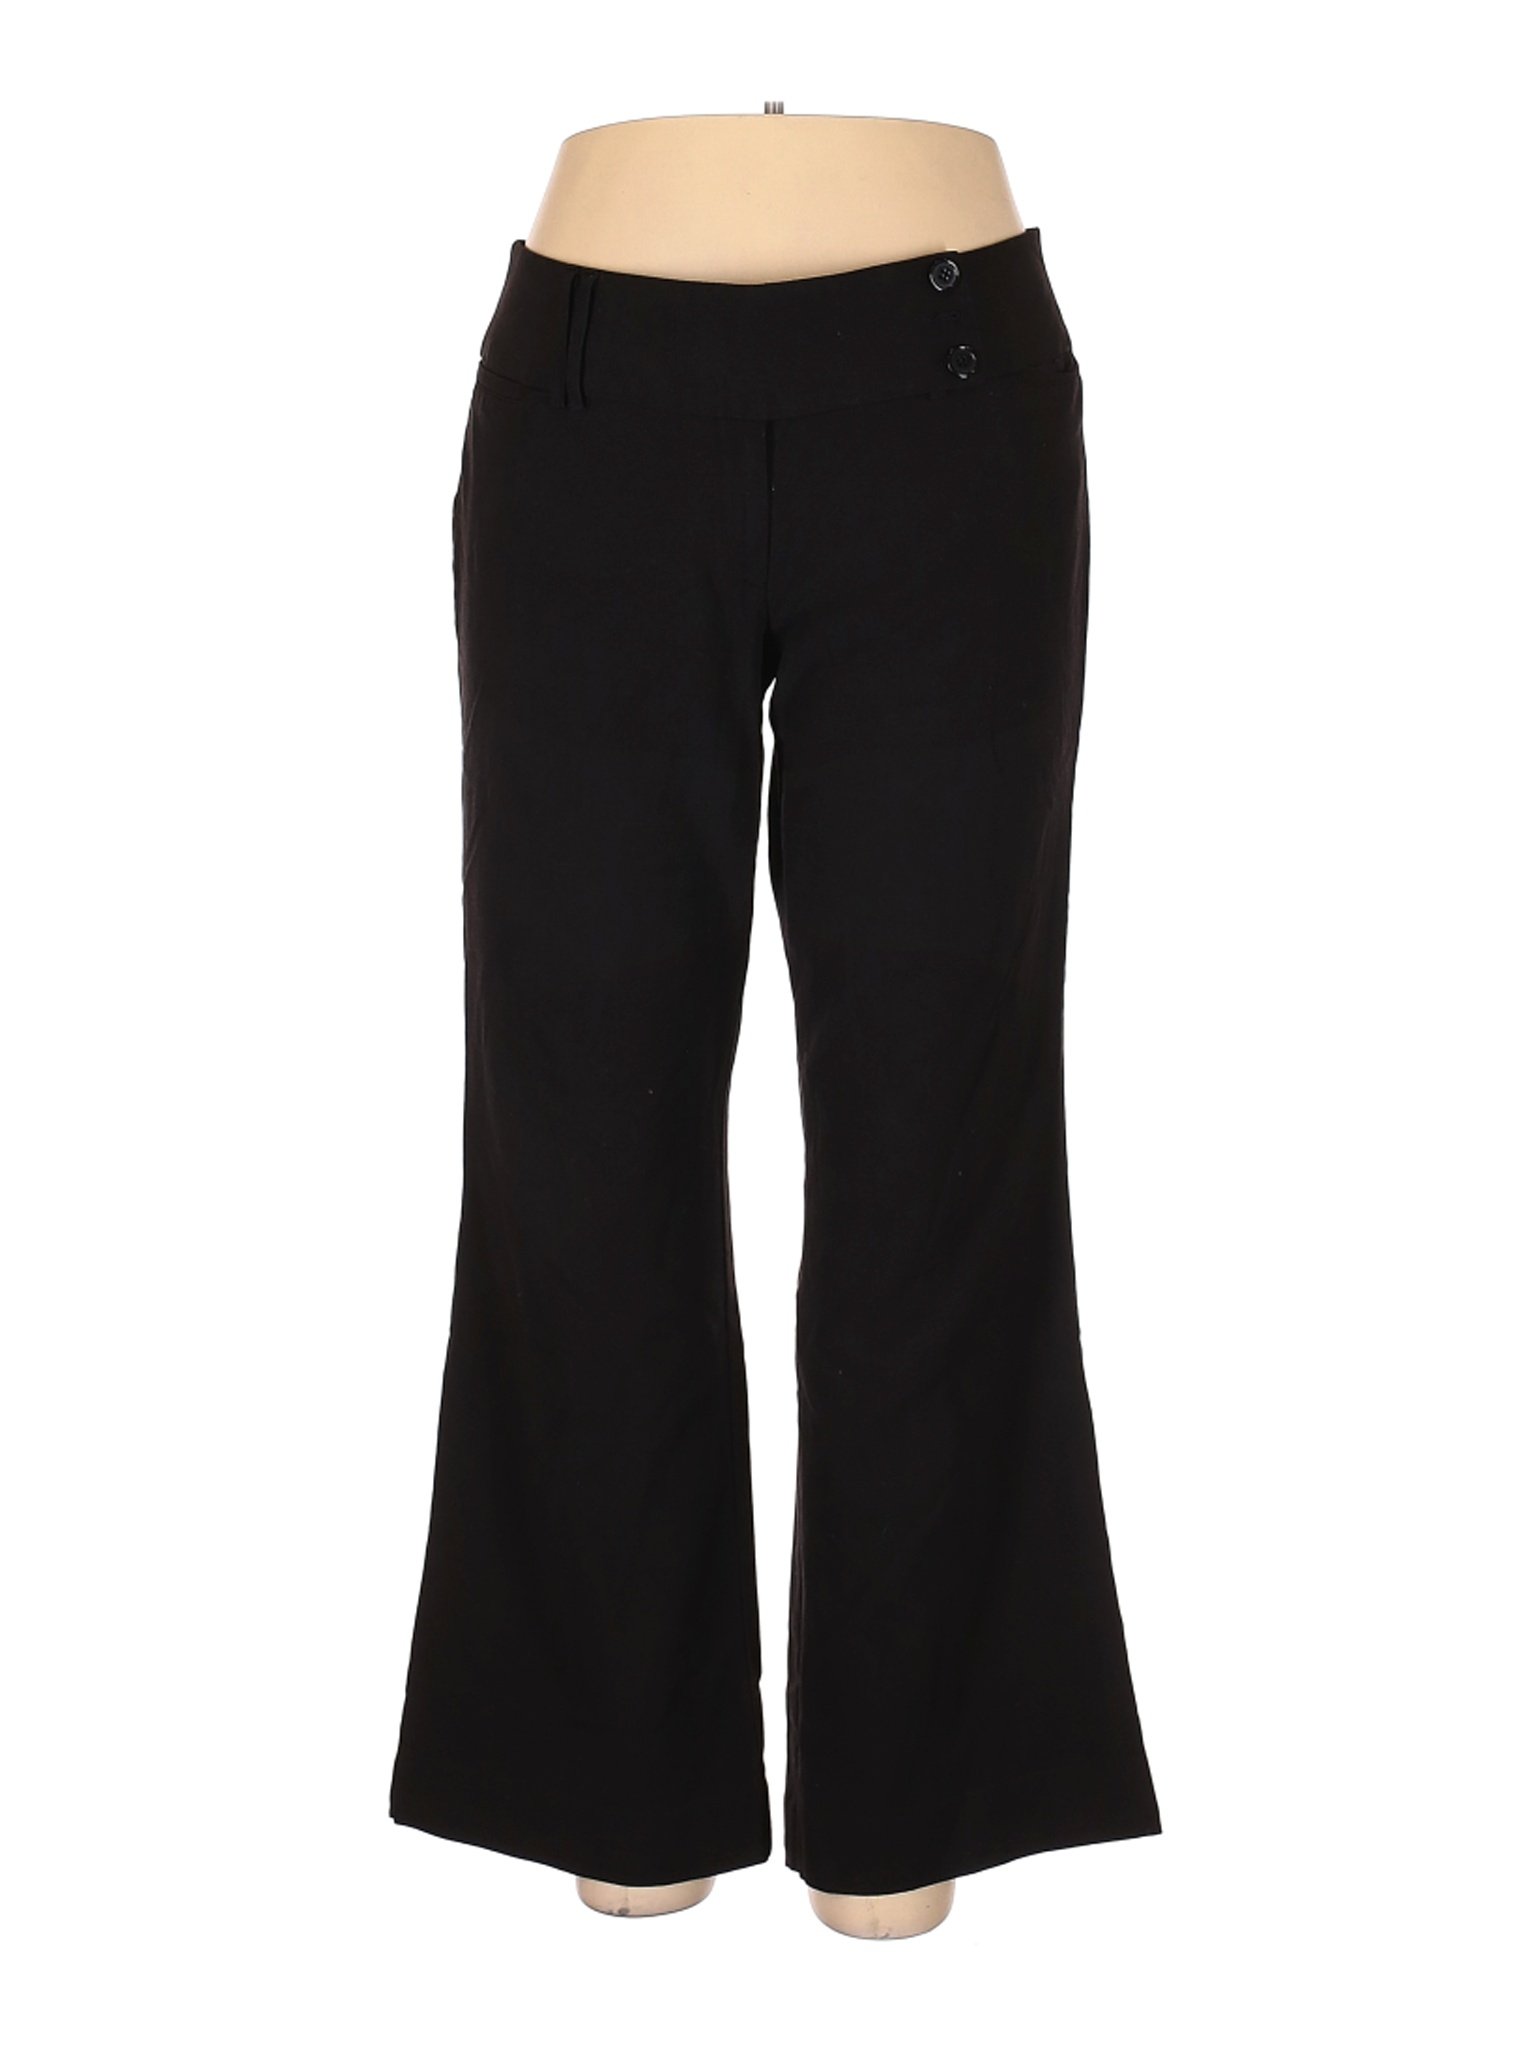 Star City Women Black Dress Pants 17 | eBay